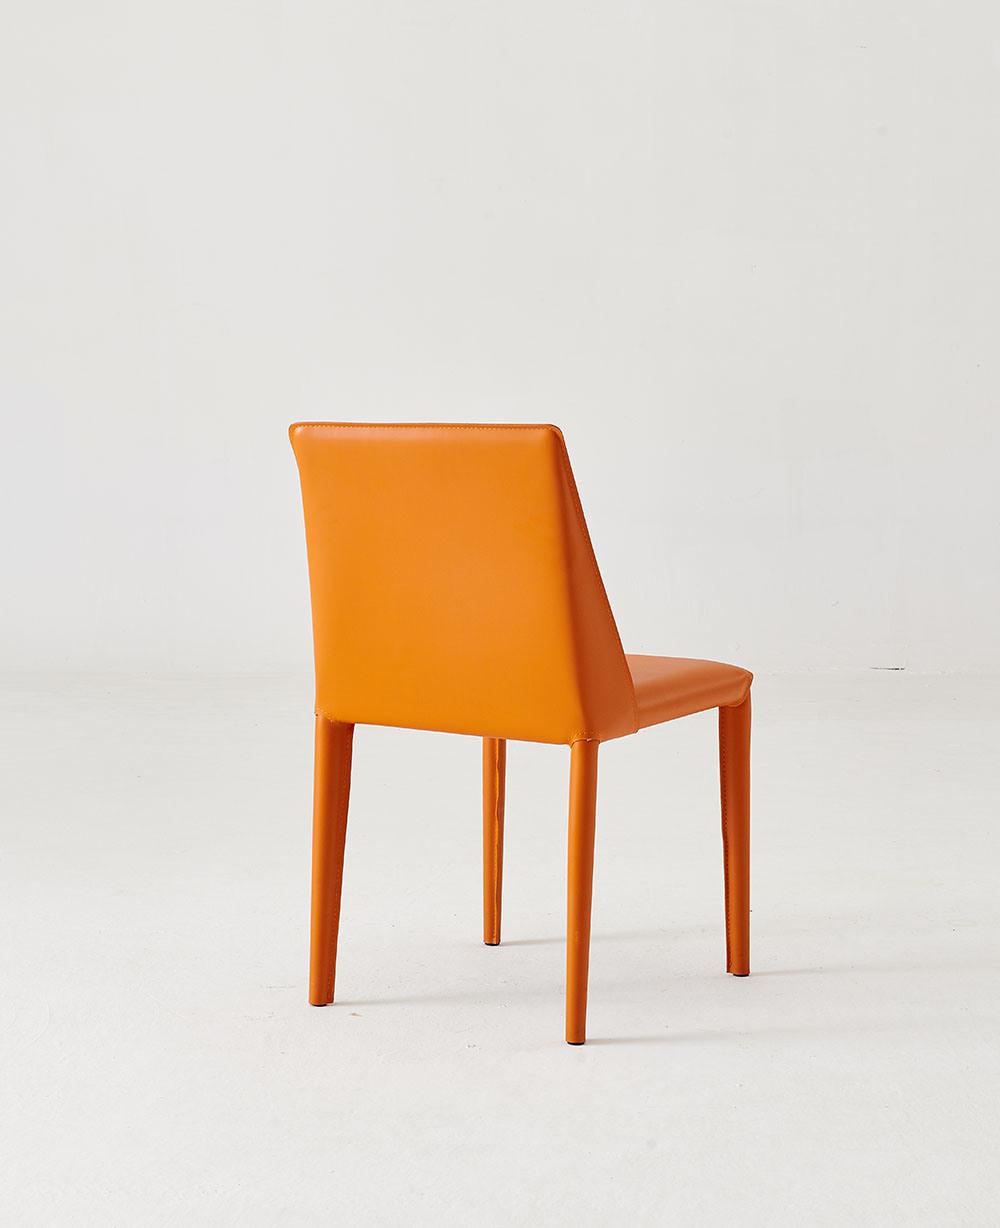 China Manufacturer New Design Furniture Orange Dining Chair